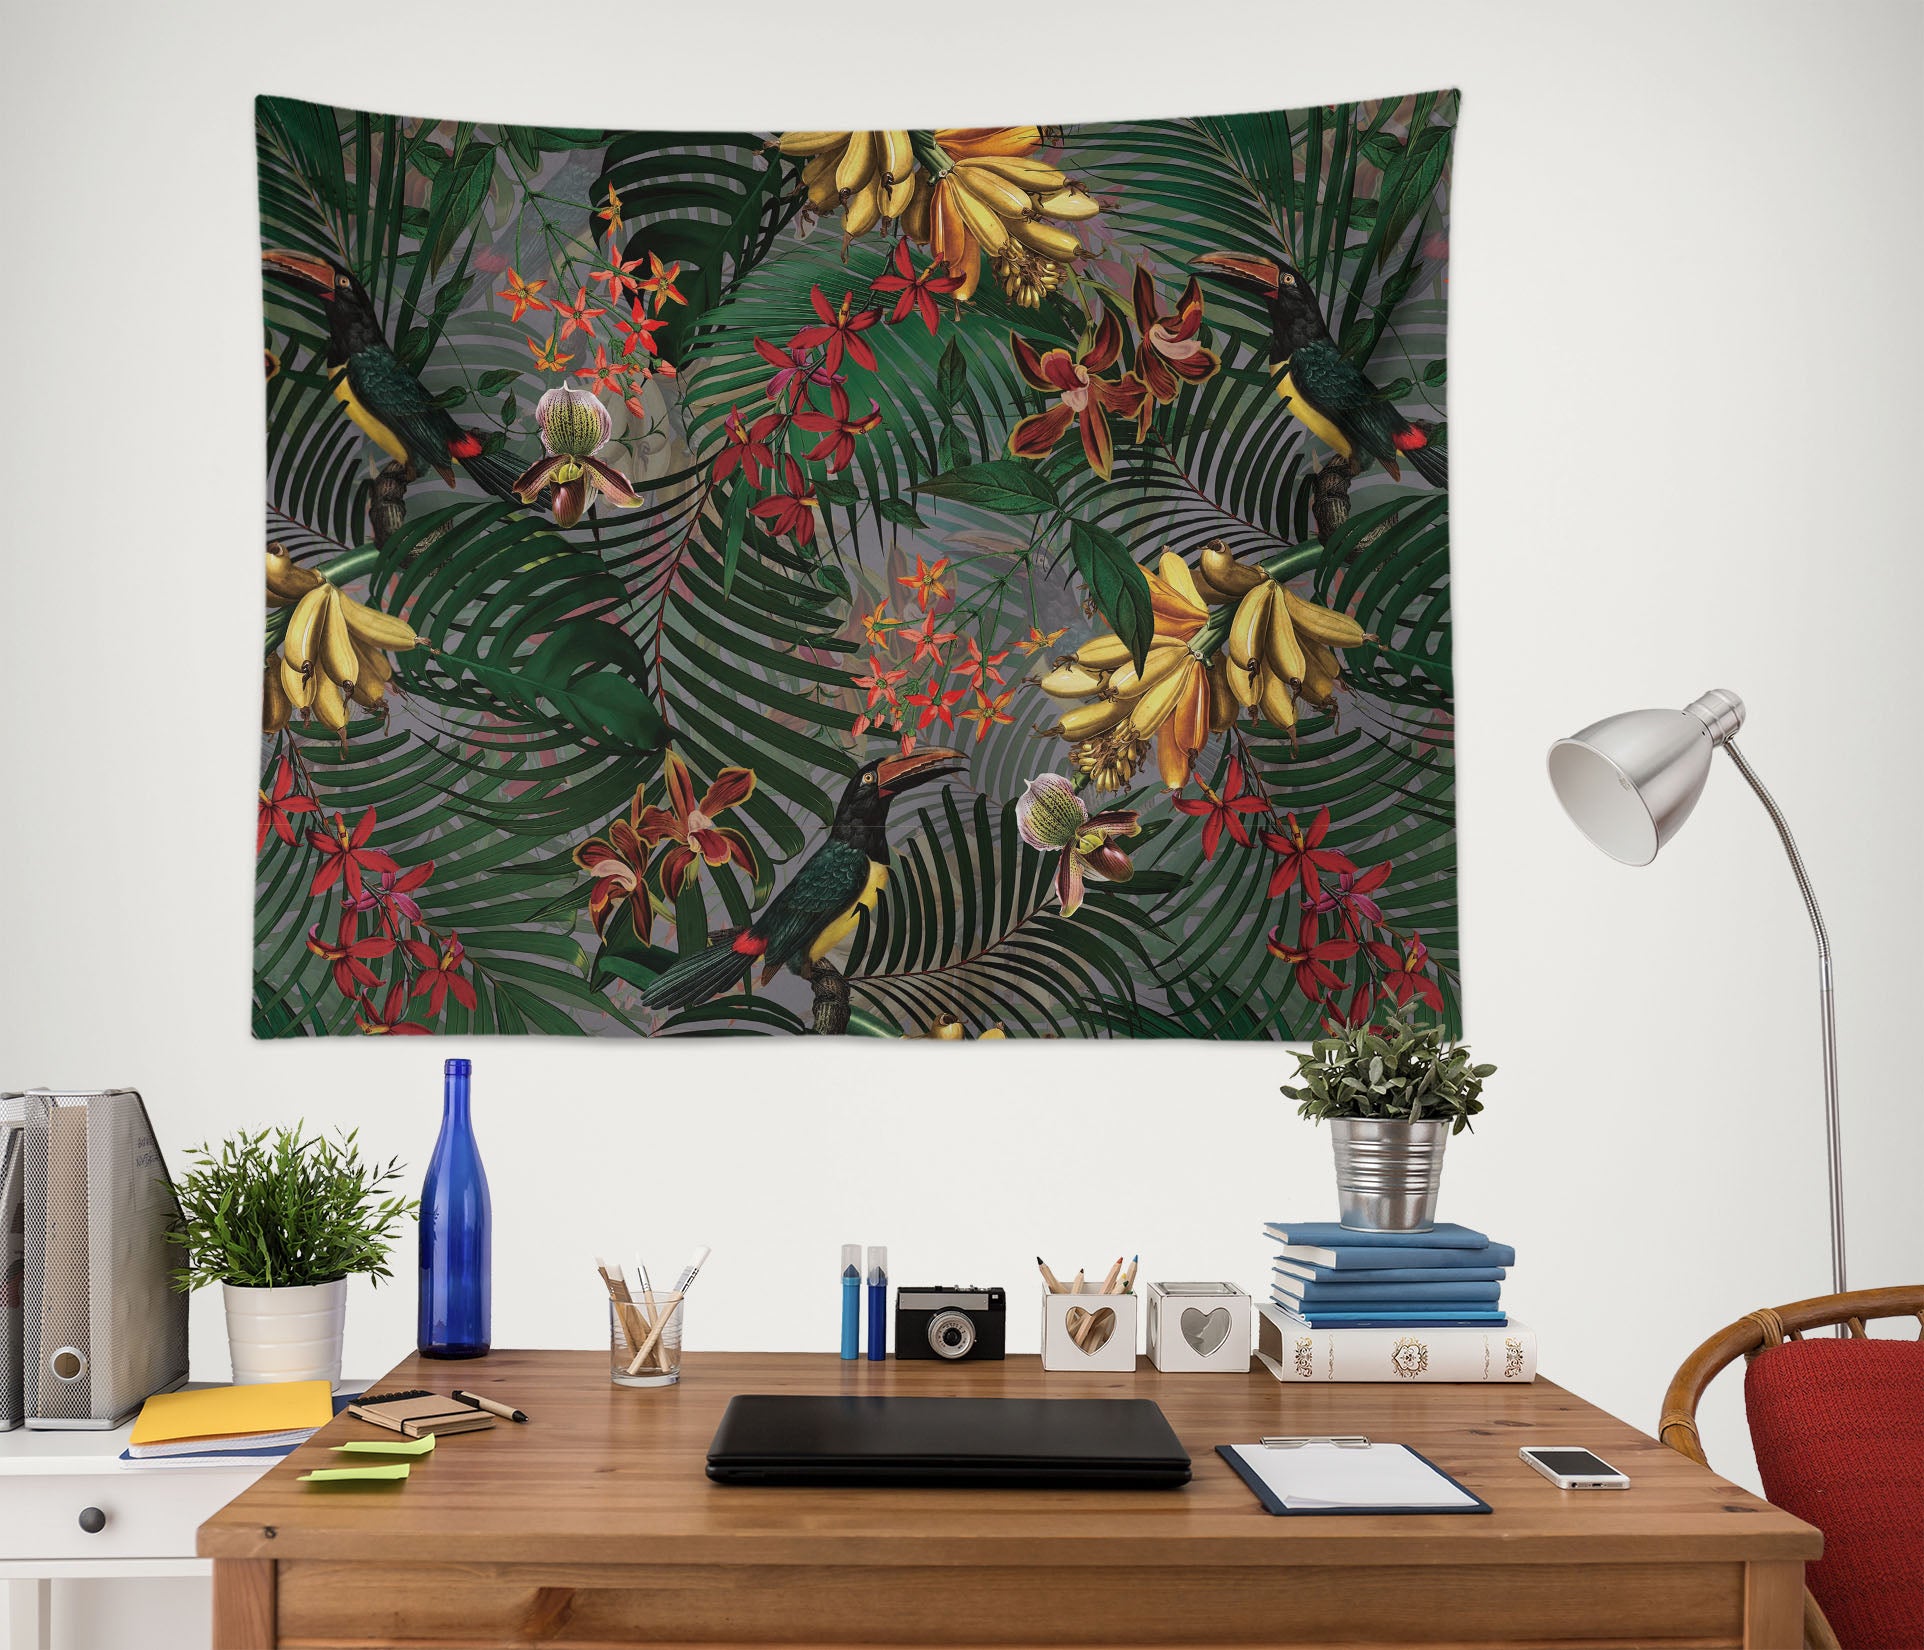 3D Flower Banana 5340 Uta Naumann Tapestry Hanging Cloth Hang